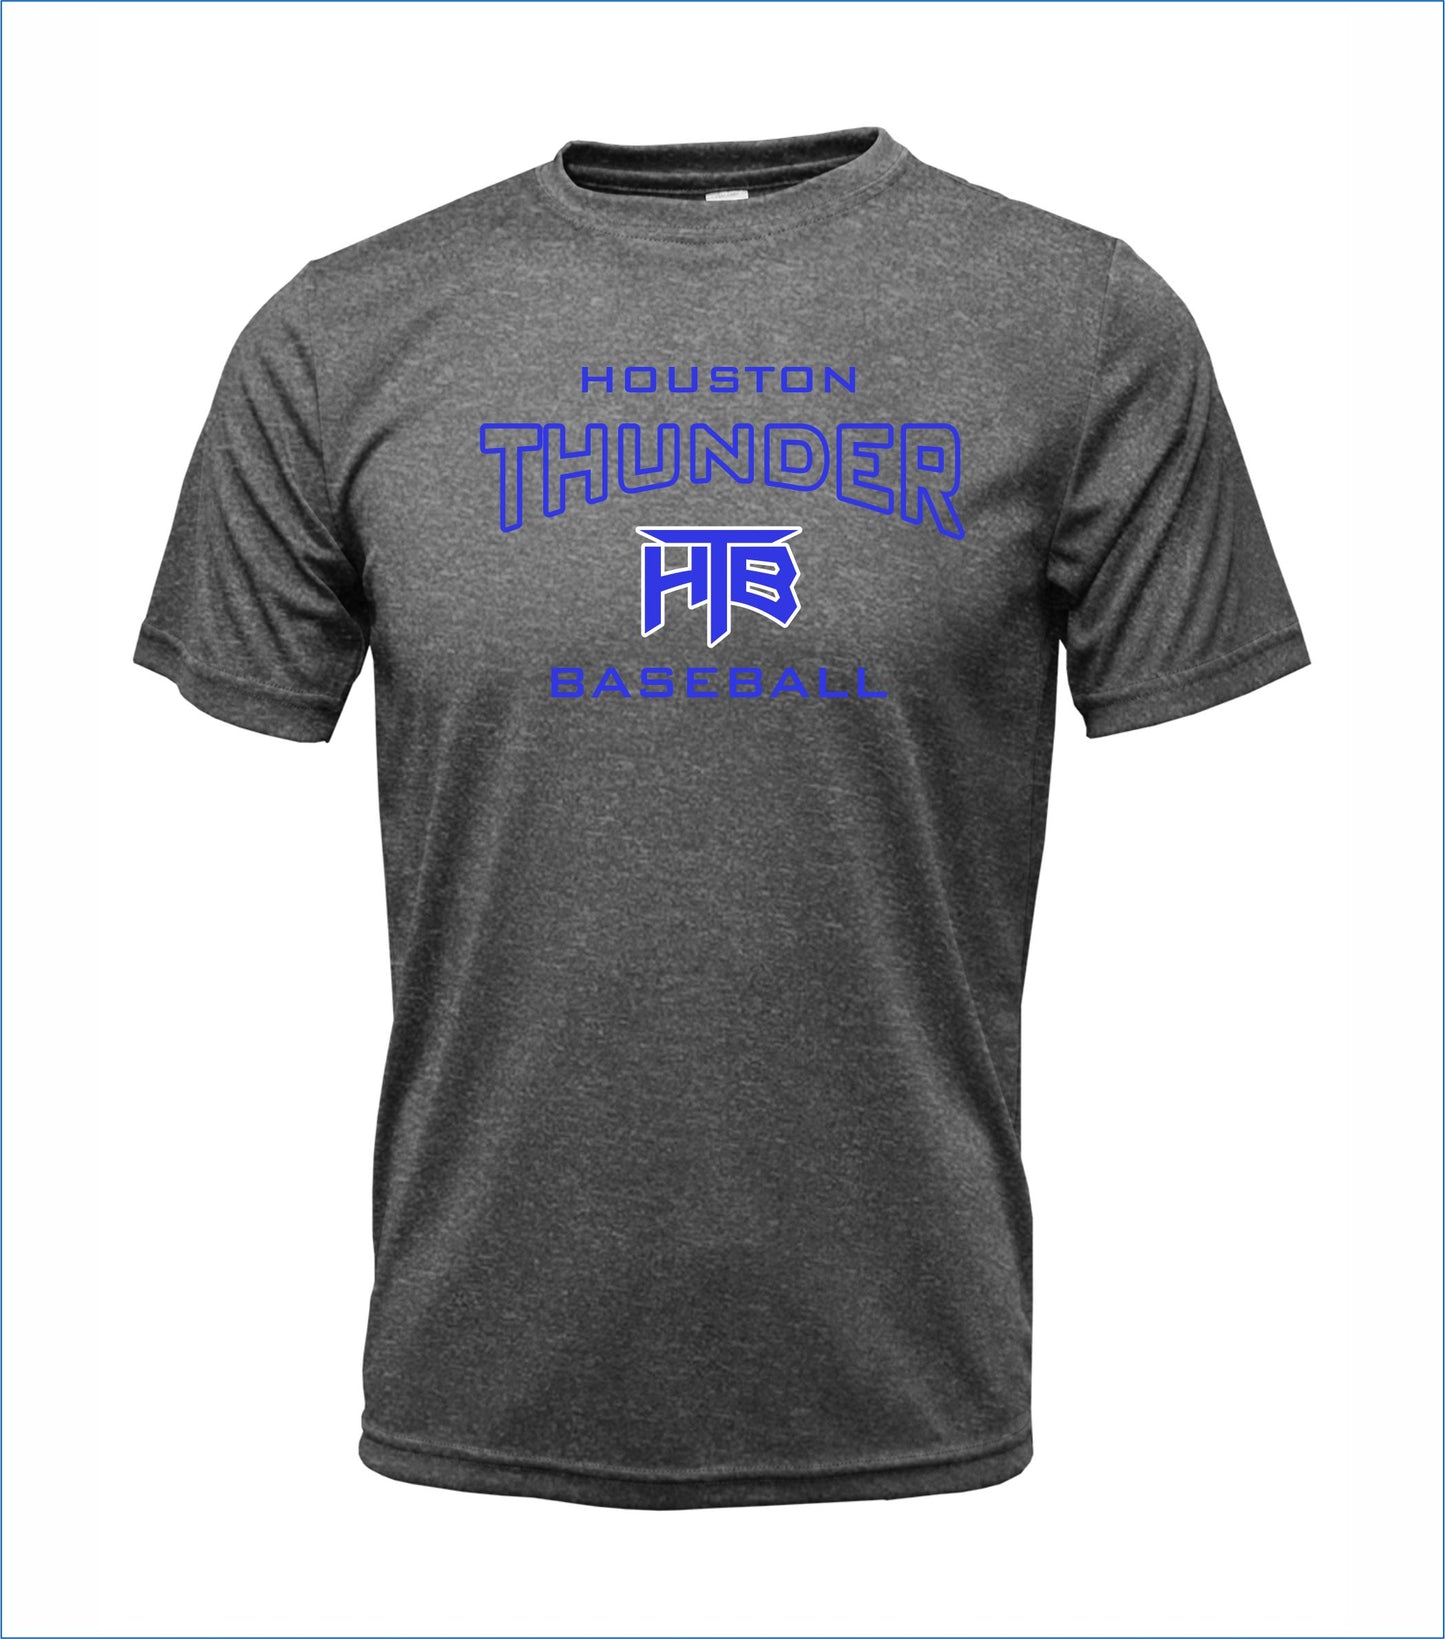 Houston Thunder Baseball Short Sleeve Cotton T-Shirt